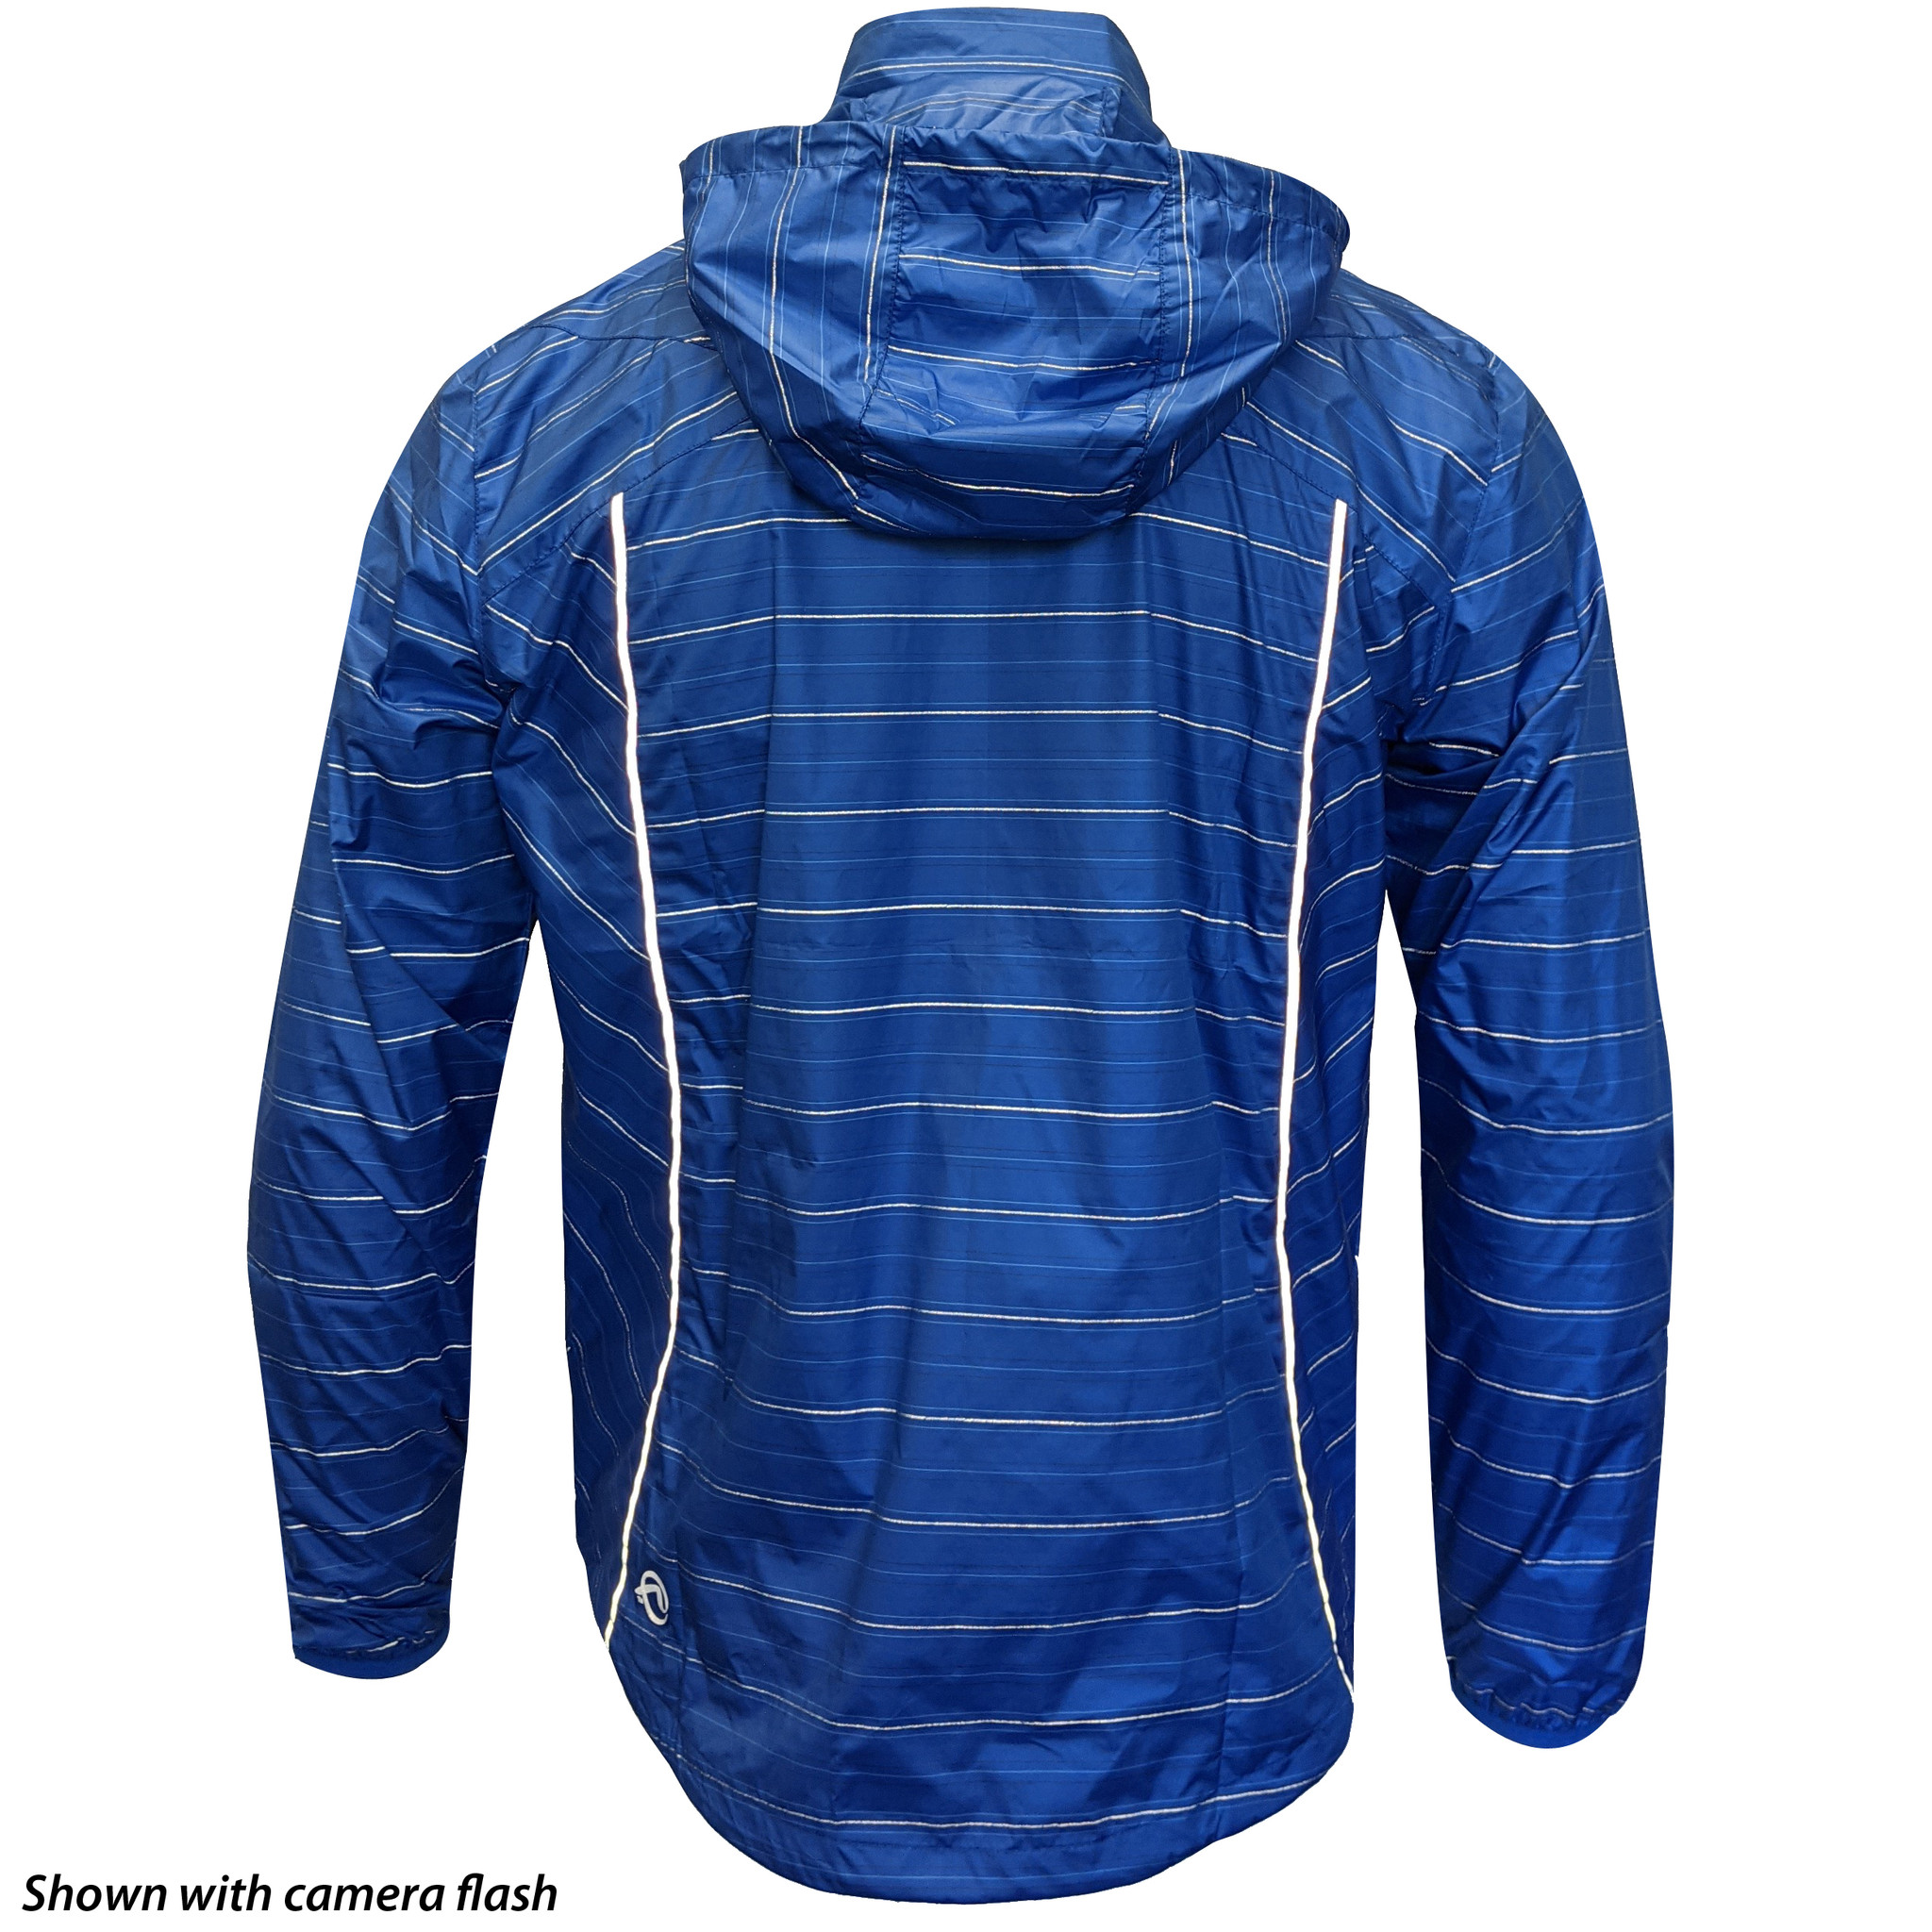 Blue Star Print Reflective Waterproof Puffer Jacket - Blue